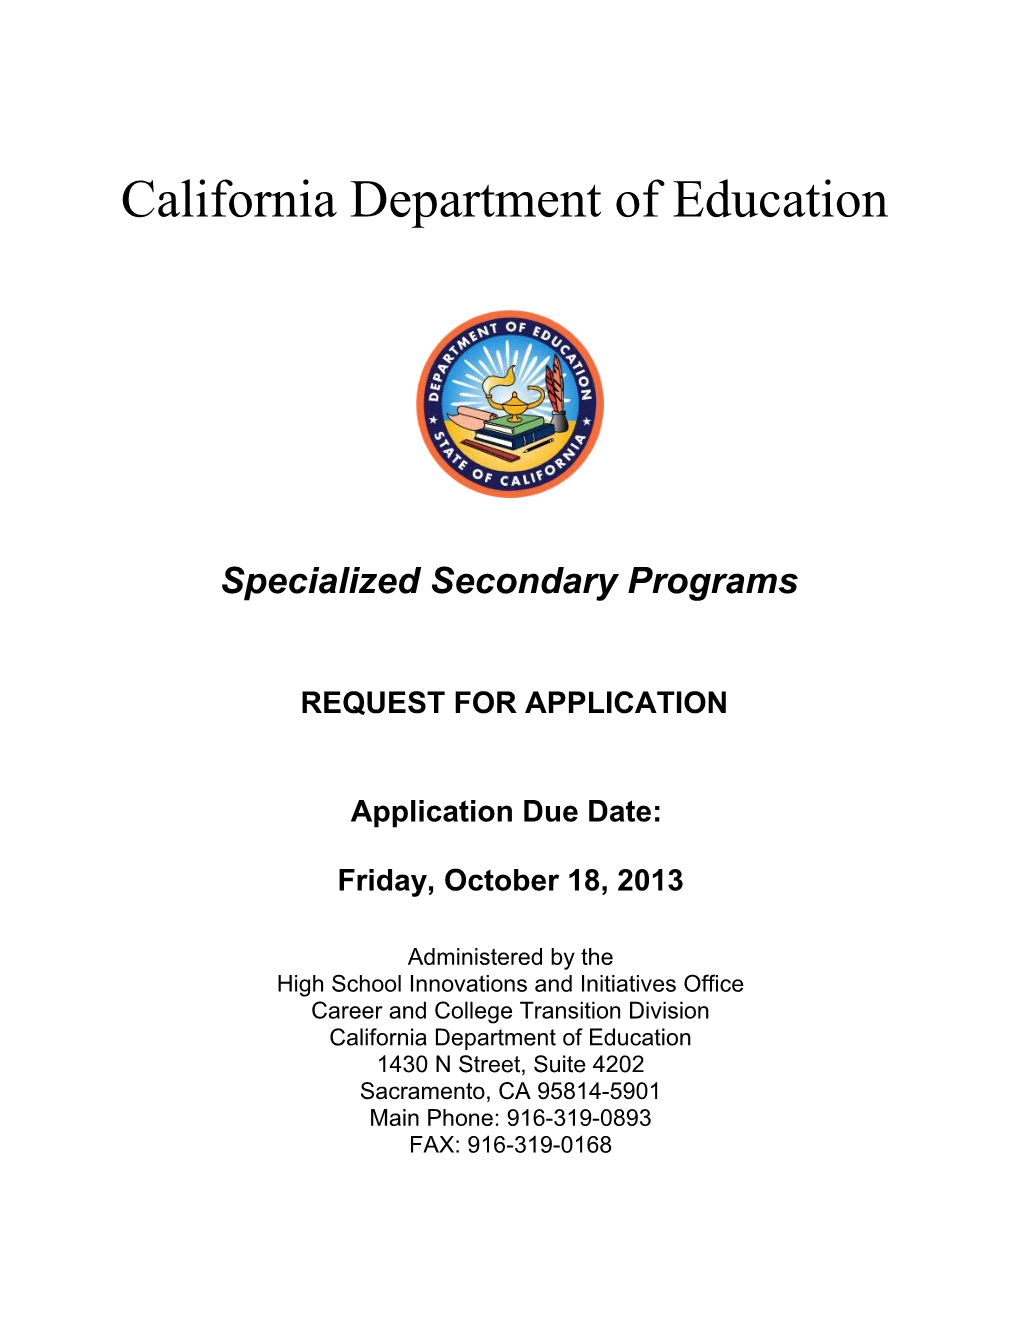 App-13: Specialized Secondary Programs (CA Dept of Education)